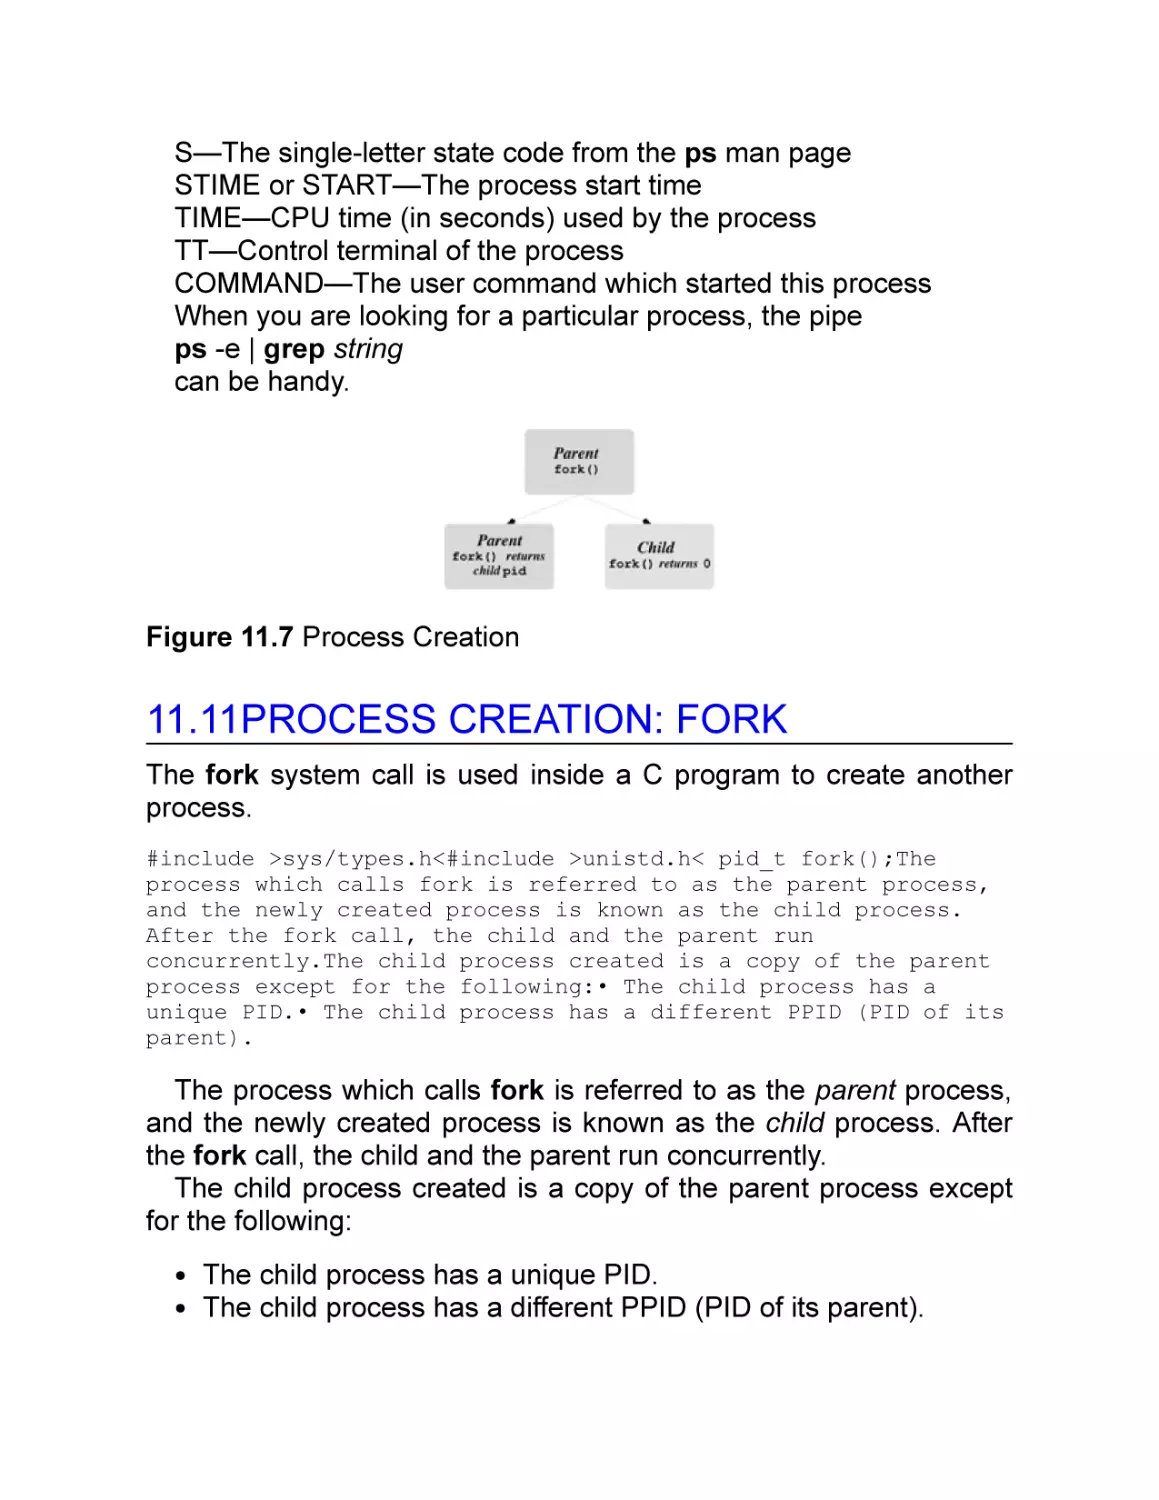 11.11 Process Creation